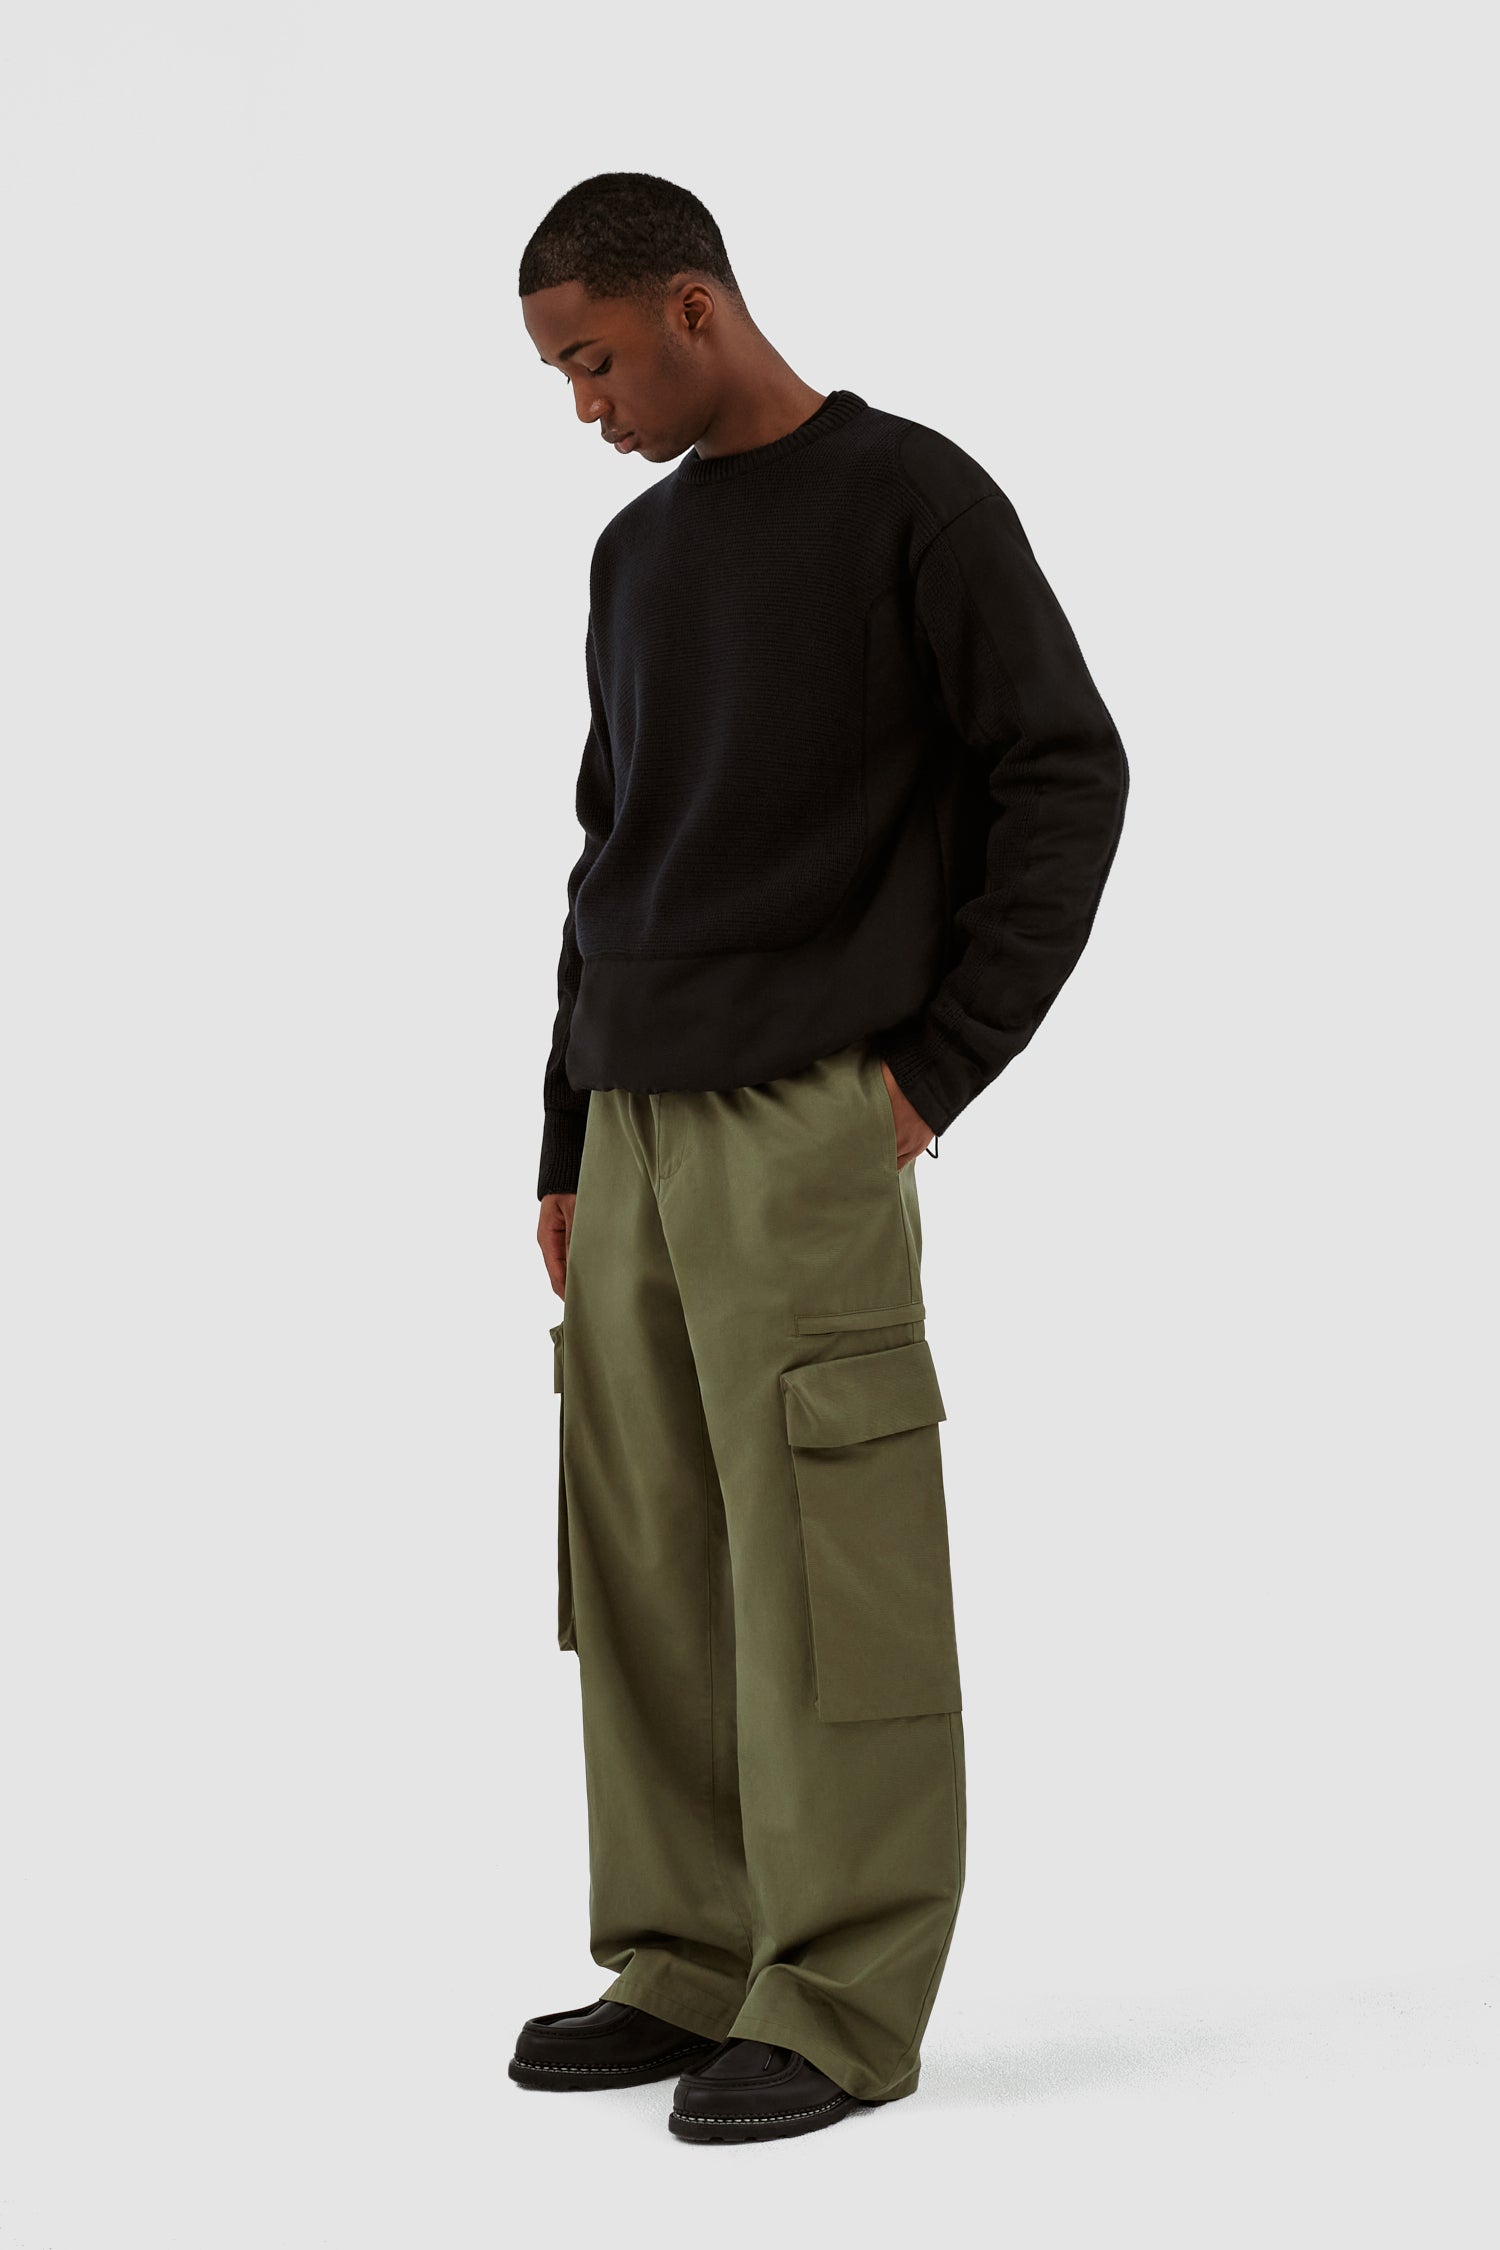 Kris Contrast Sweater - Black